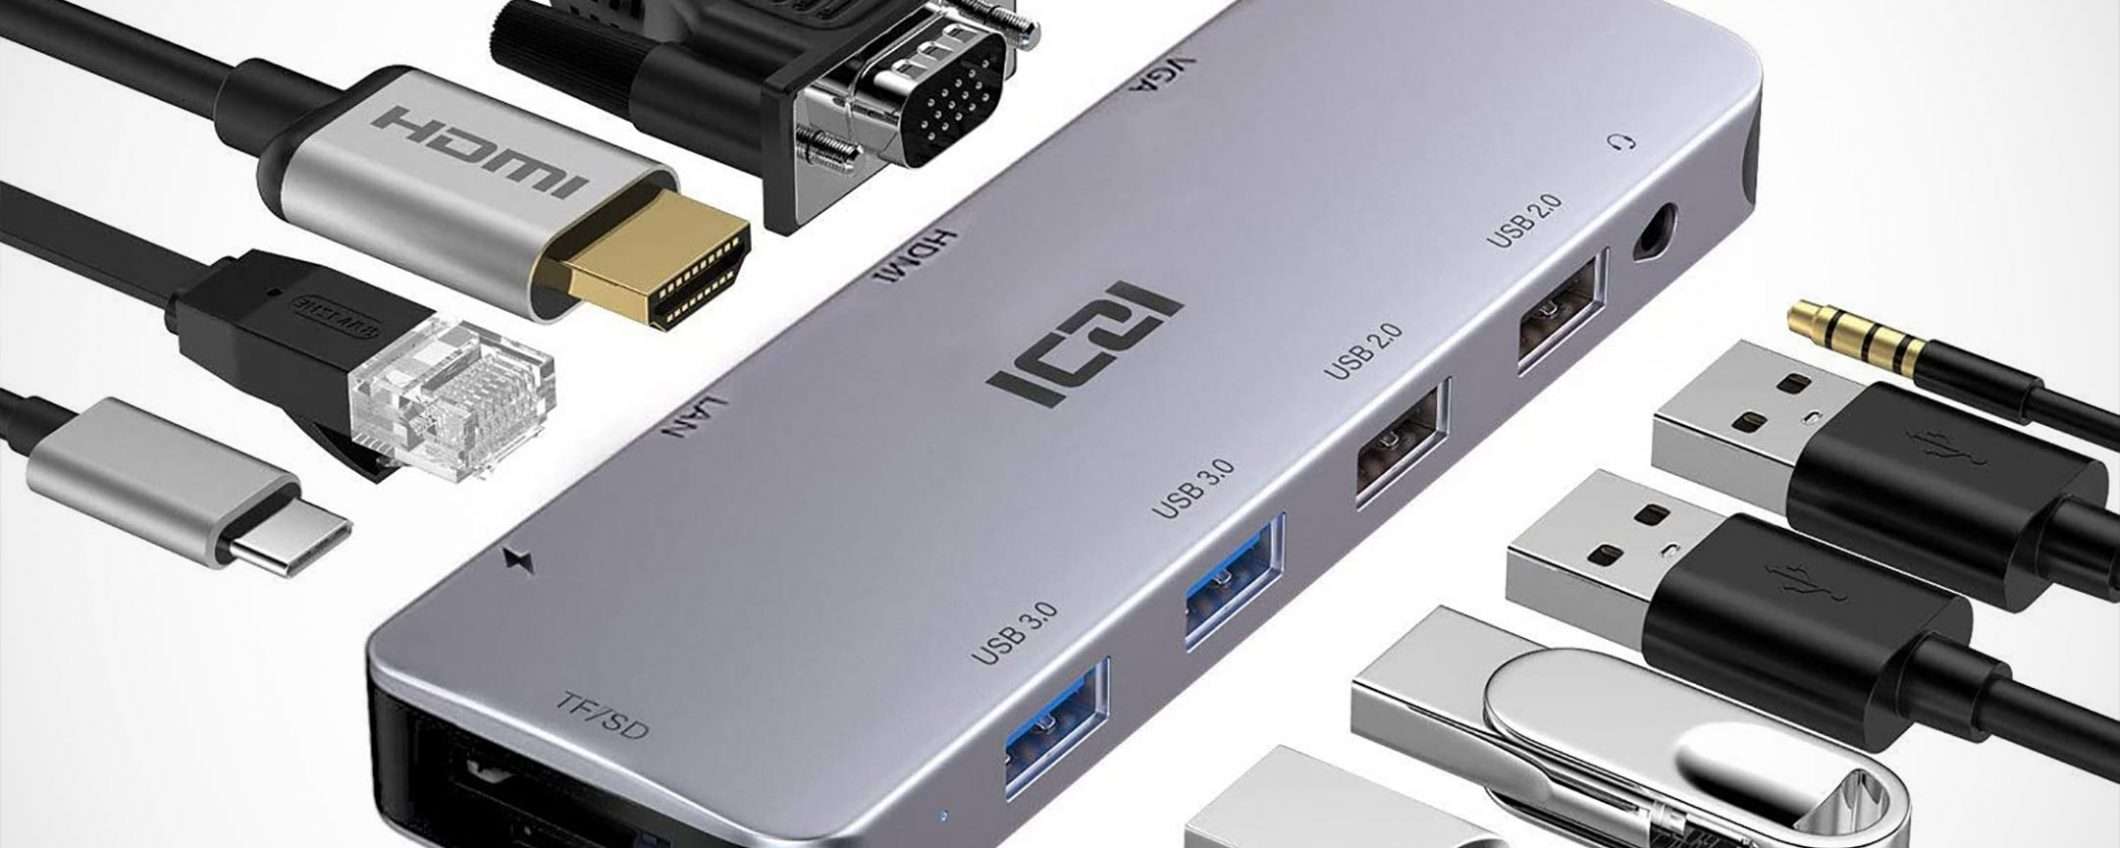 Hub USB definitivo in MAXI SCONTO su Amazon